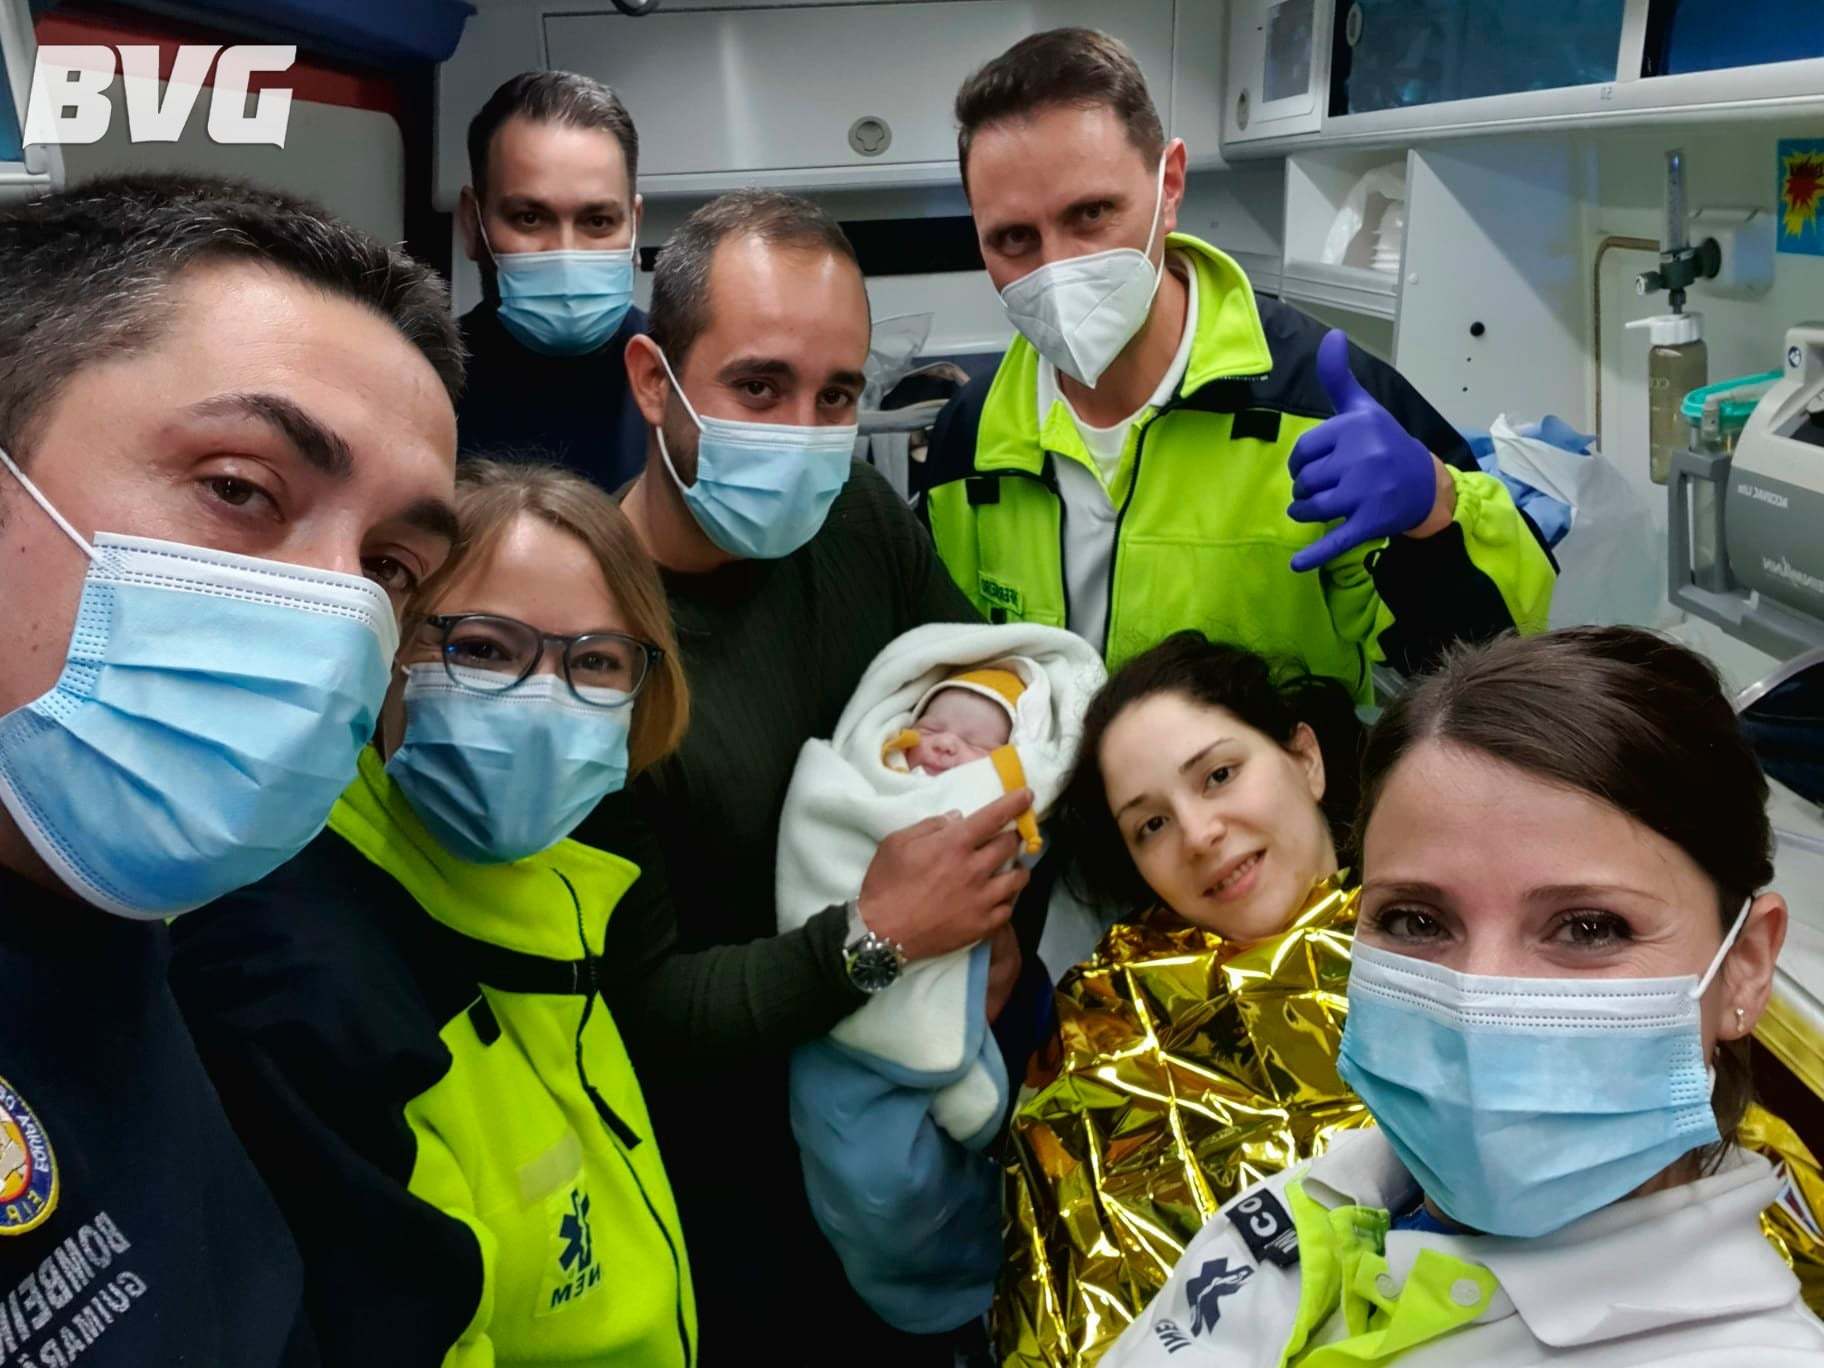 Bombeiros de Guimarães realizam parto dentro de ambulância